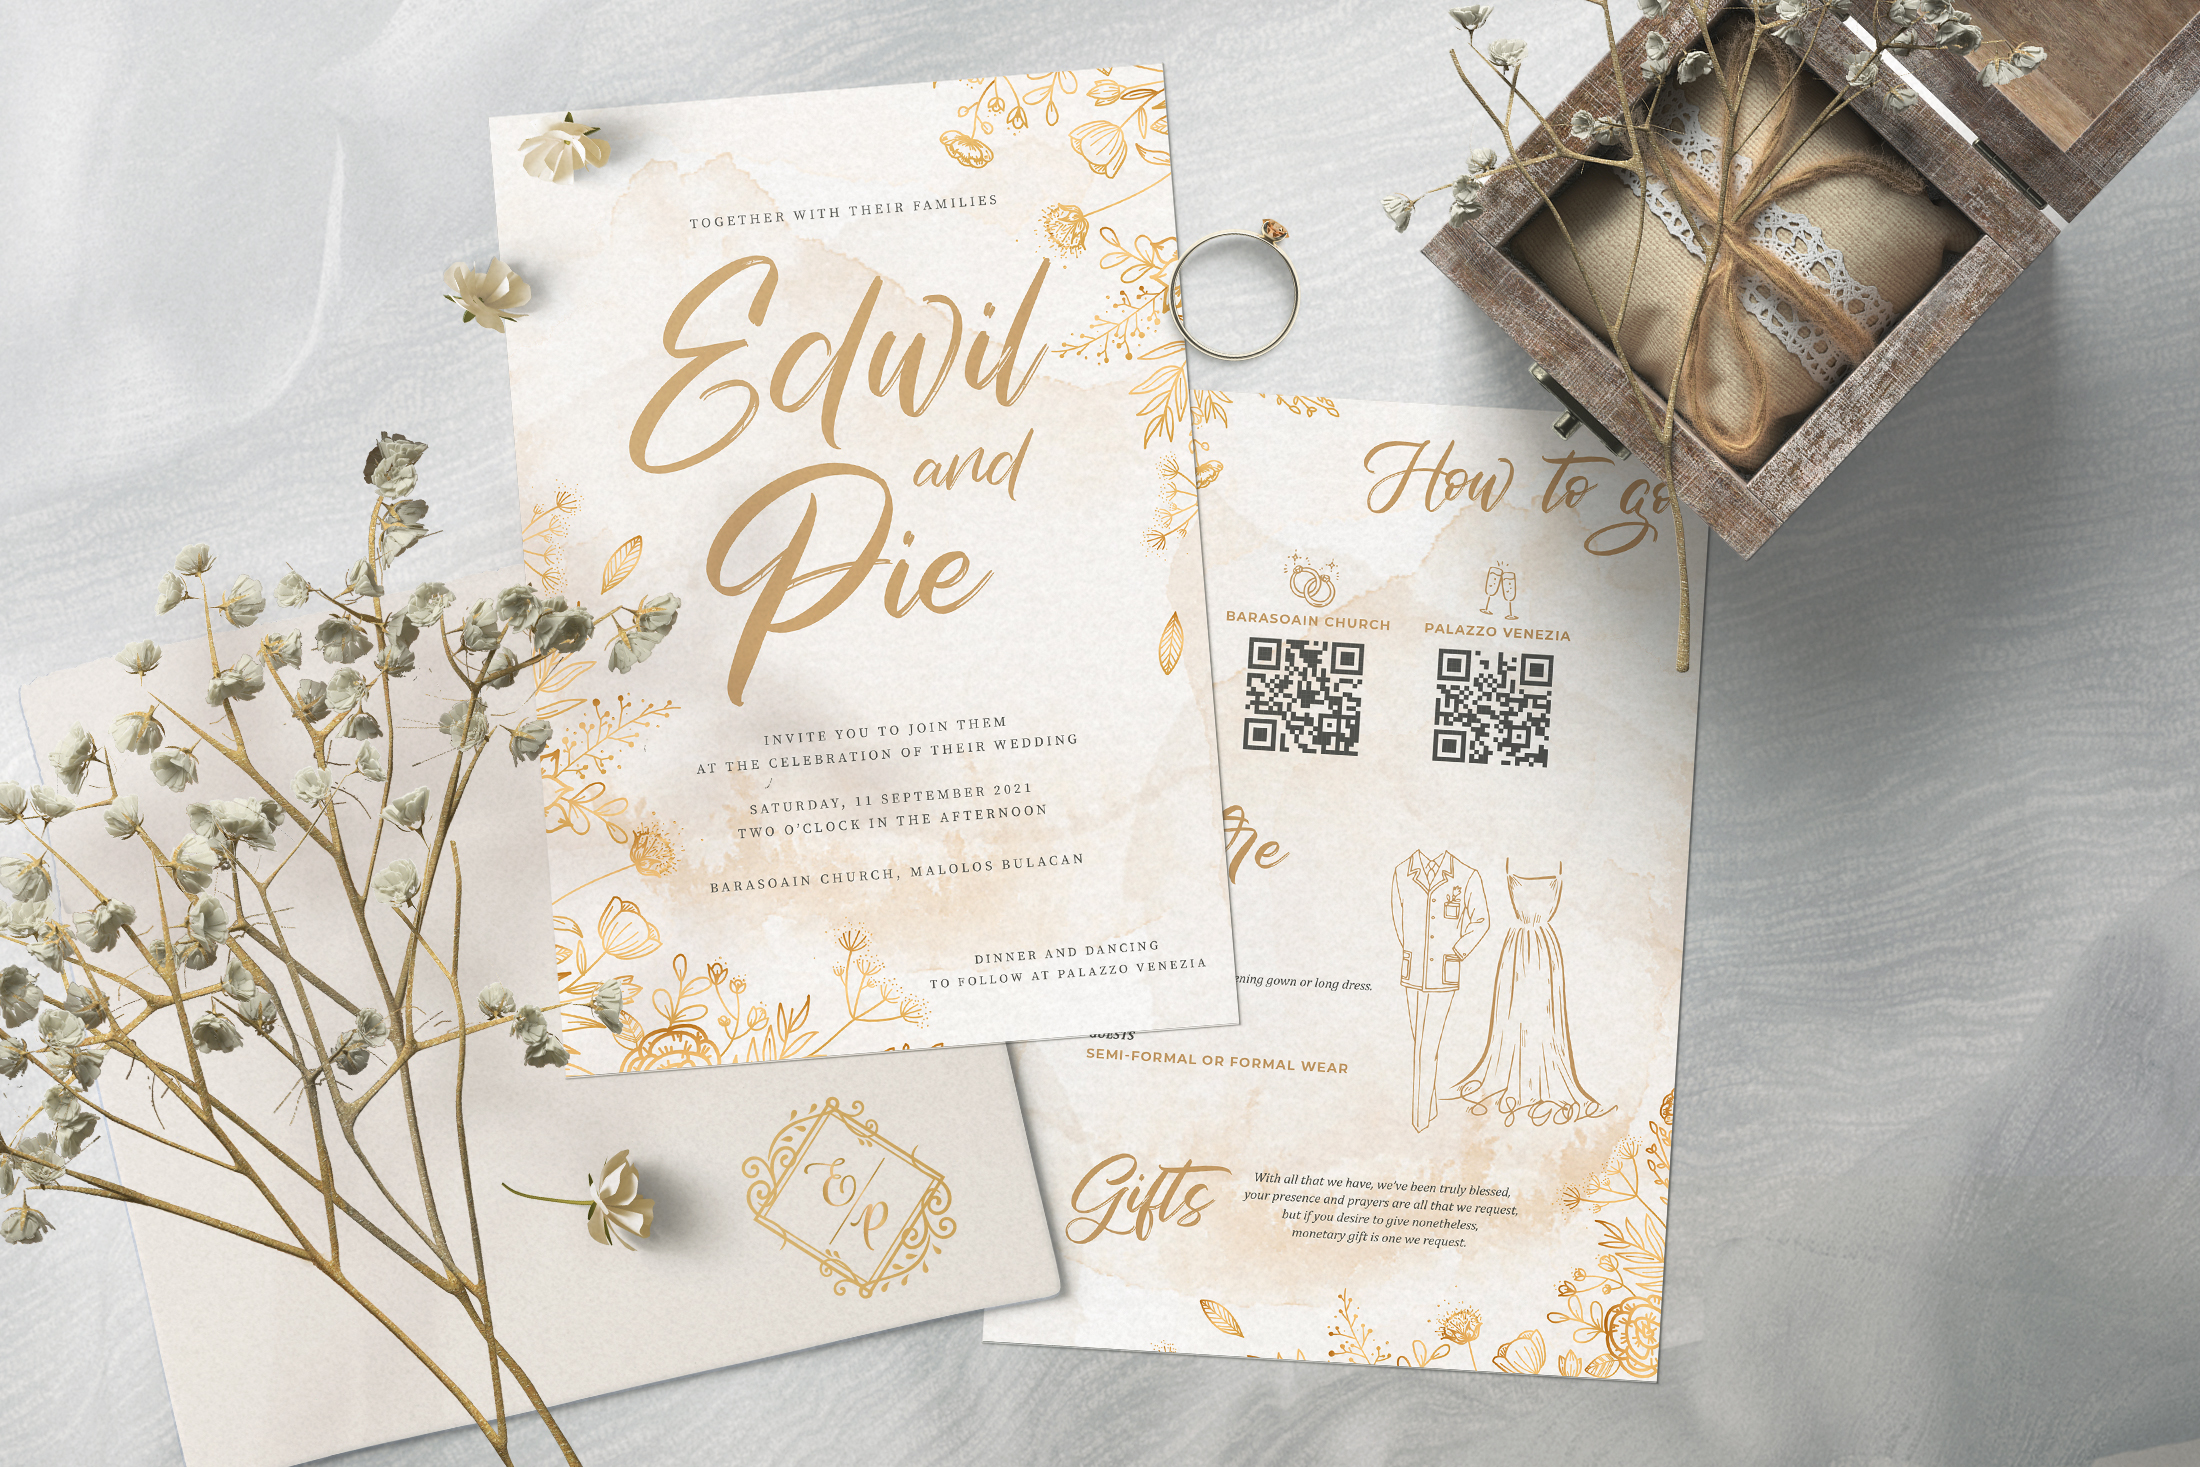 742-edwil-and-pie-wedding-invitation